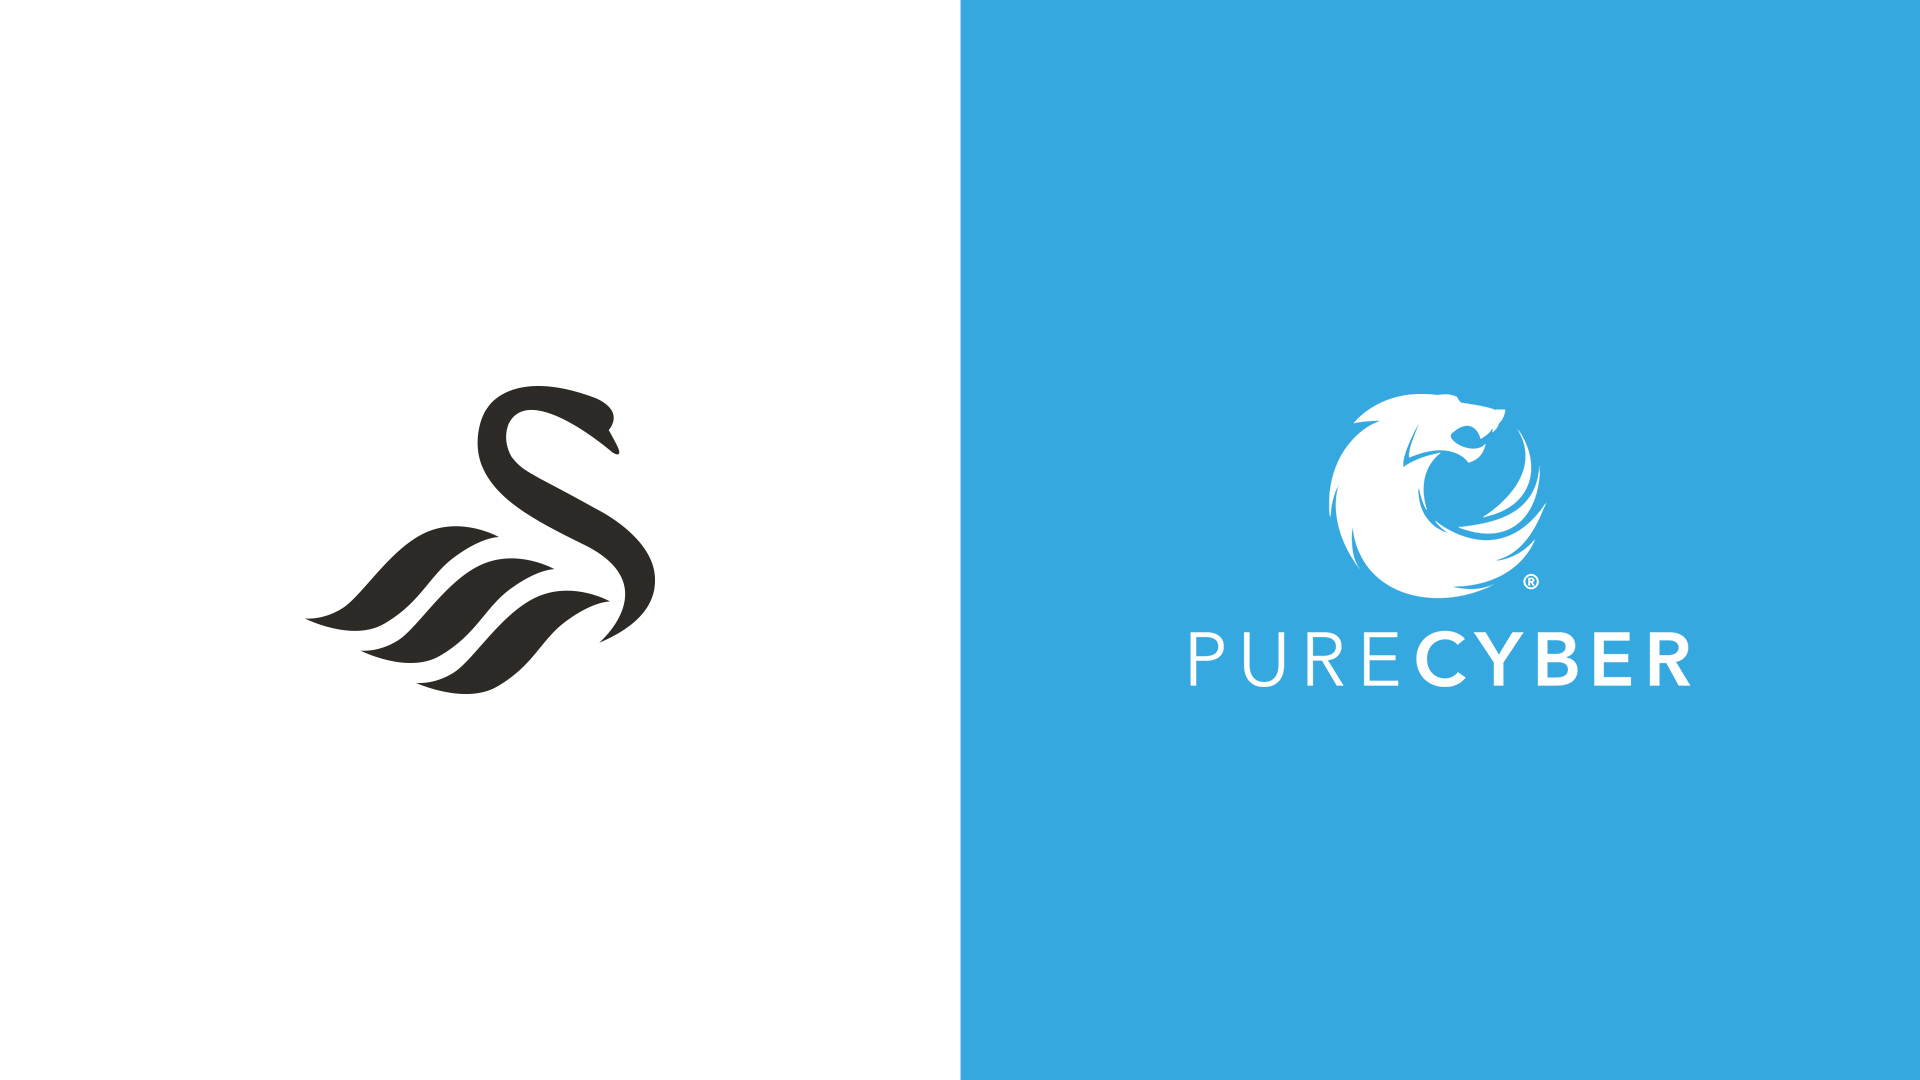 Swansea City and PureCyber